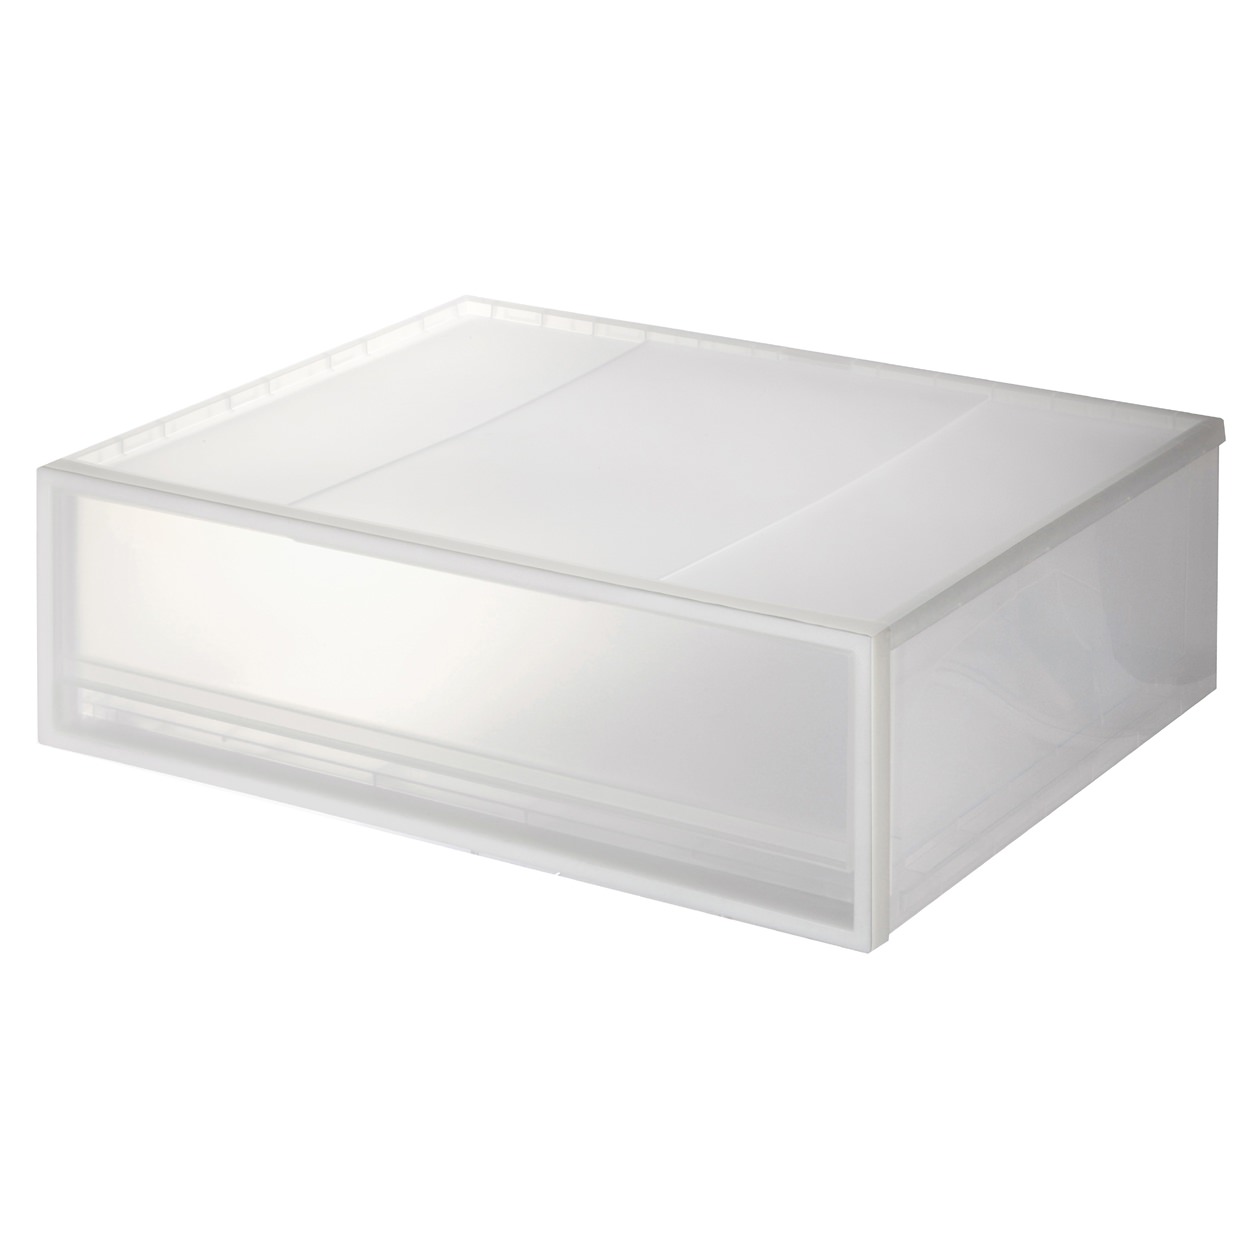 PP Storage Box - 55 x 44.5 S